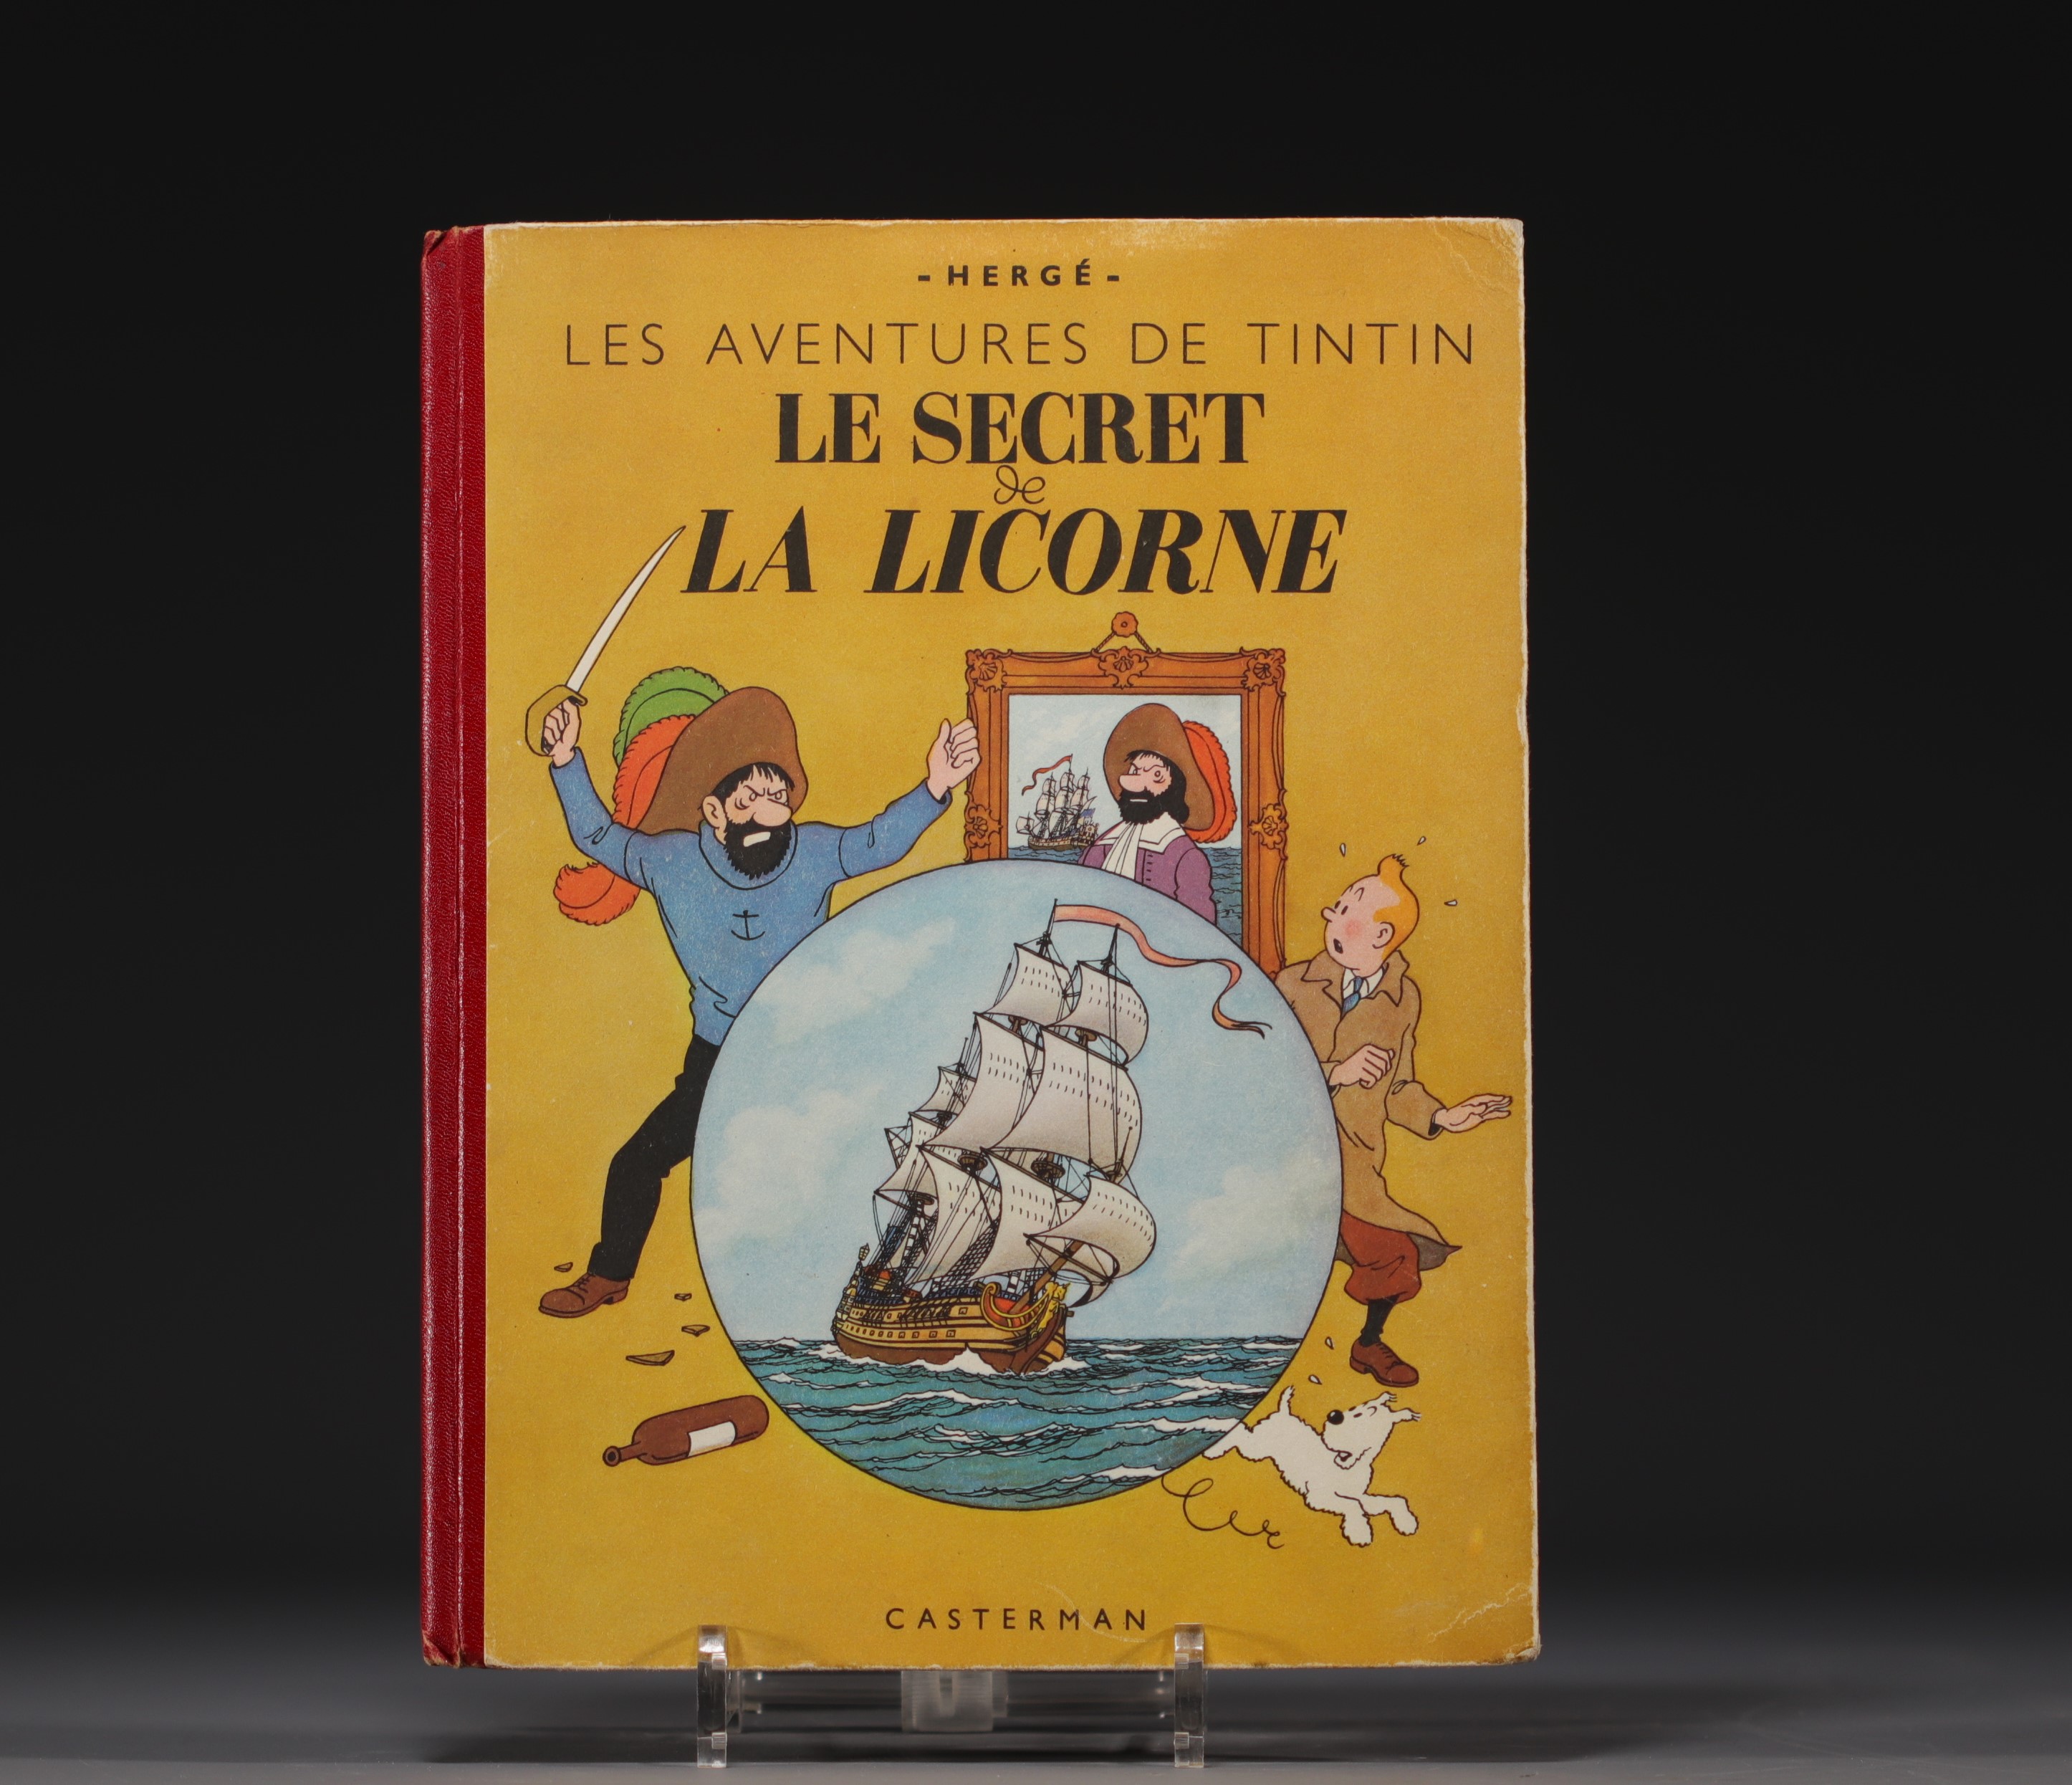 Tintin - "The Secret of the Unicorn" album, 1943 edition.